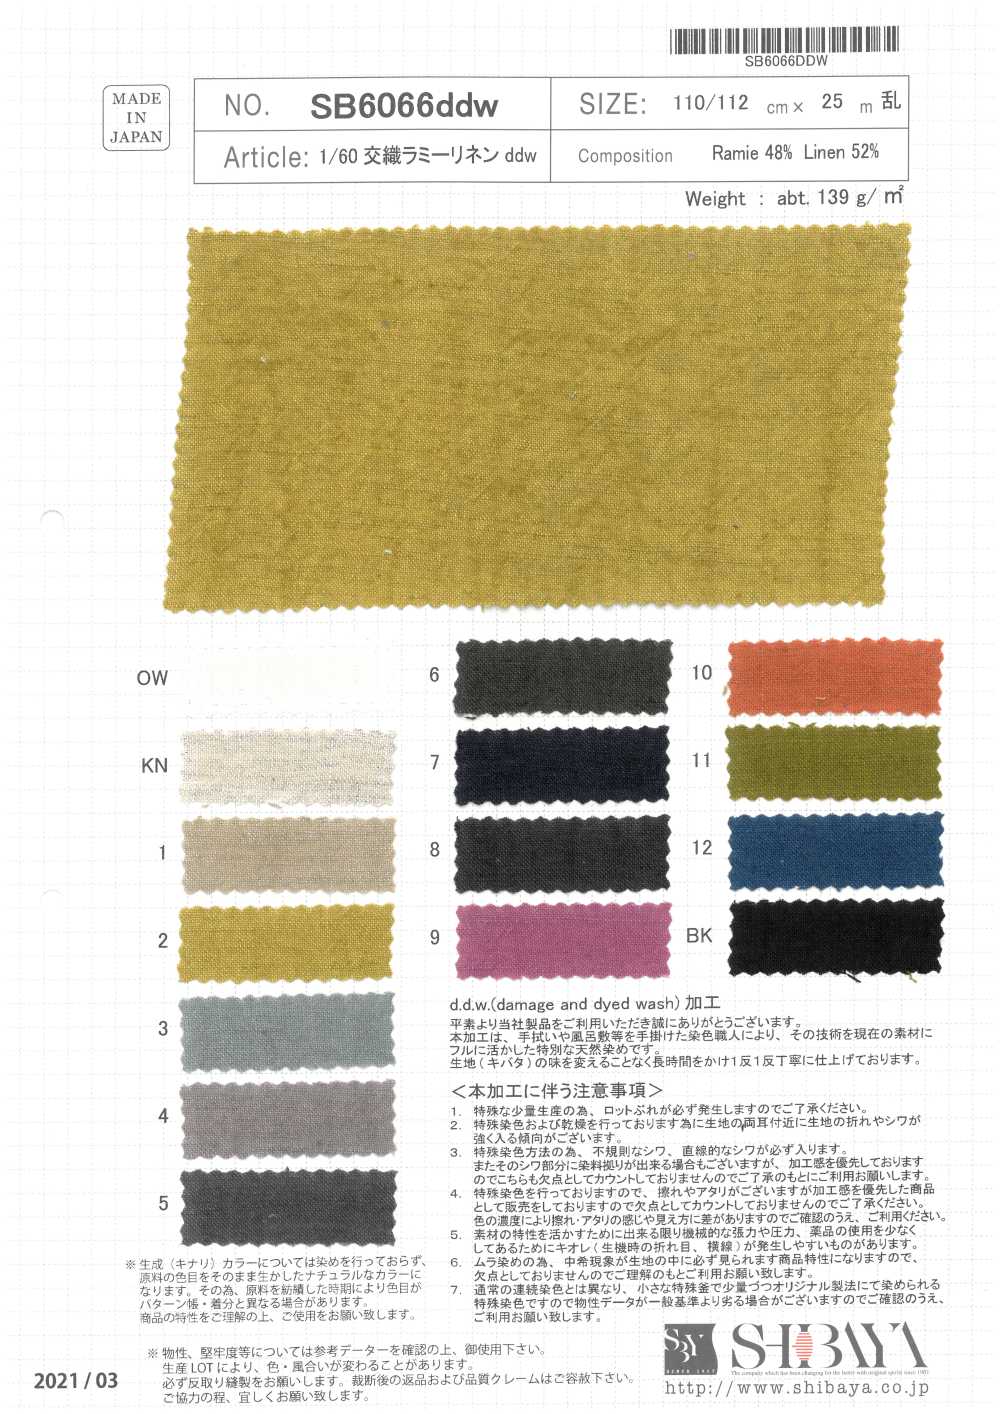 SB6066ddw 1/60 Tecido Misto Rami Linho Ddw[Têxtil / Tecido] SHIBAYA